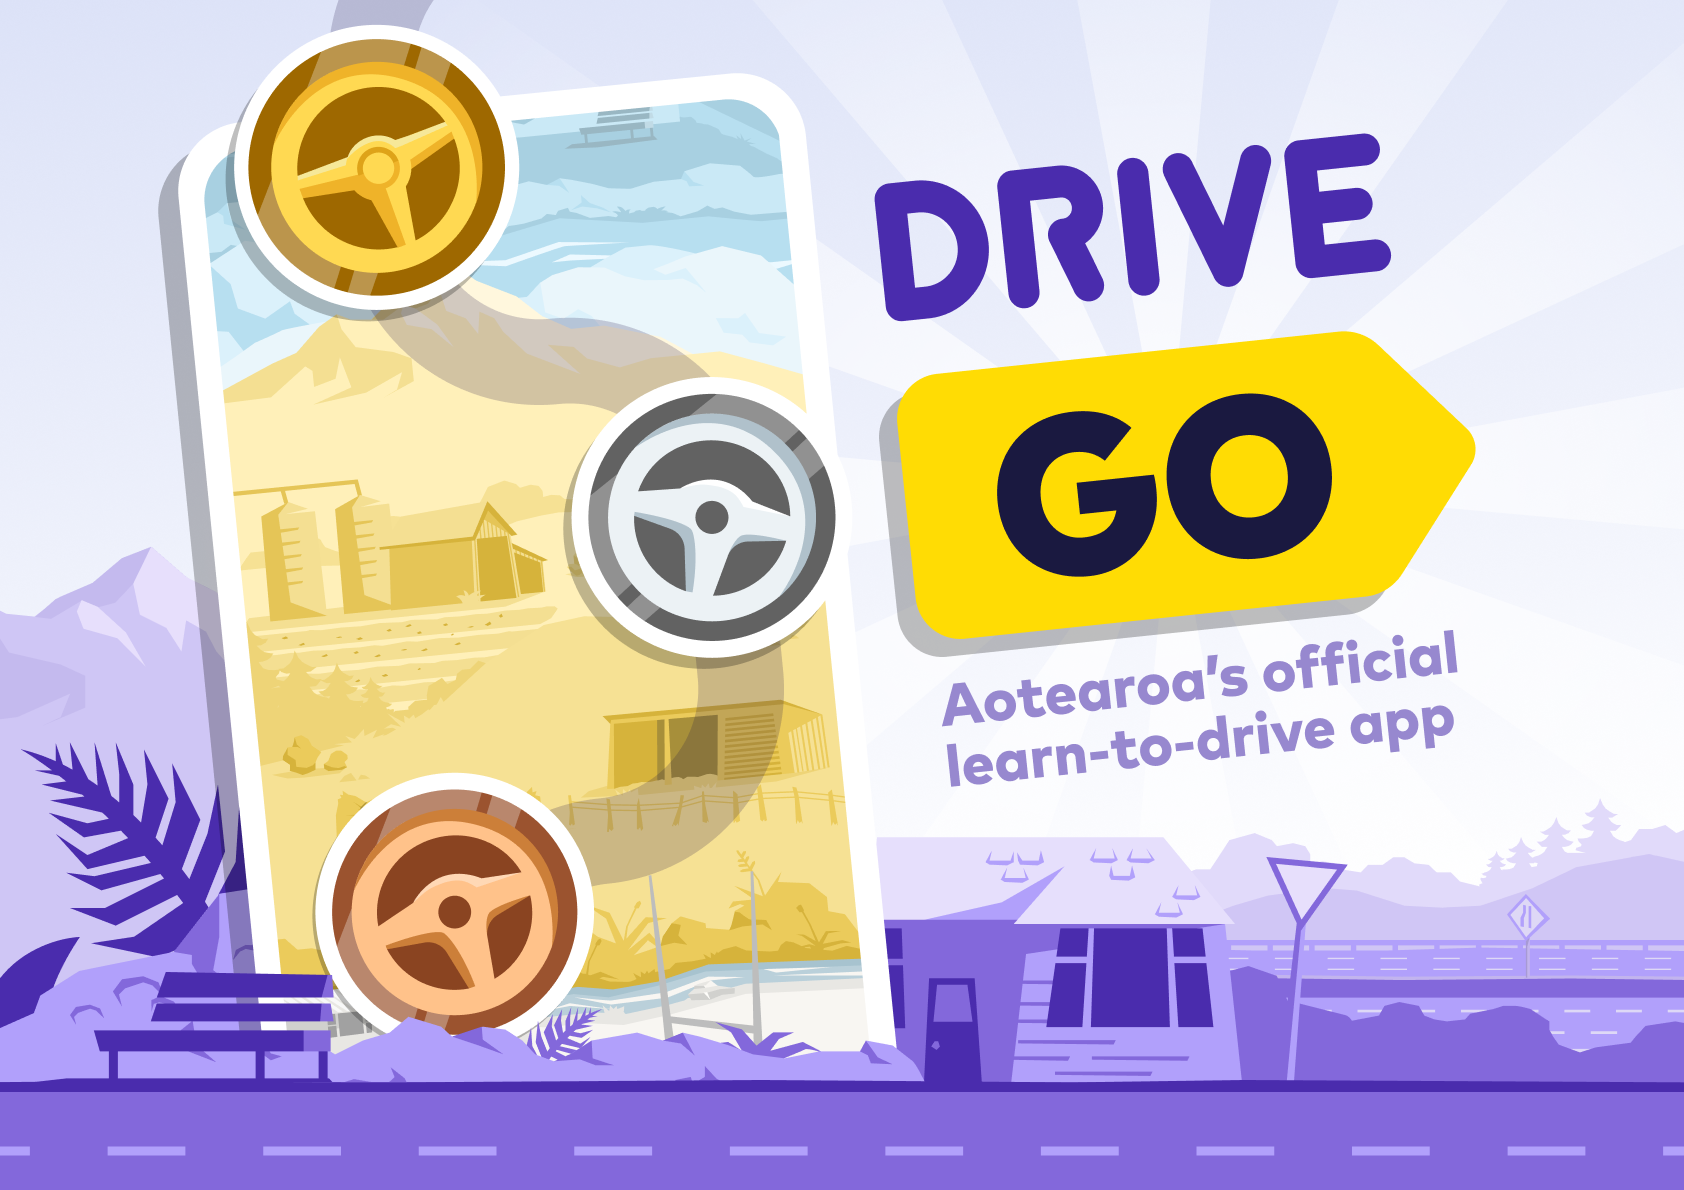 Drive Go. Aotearoa’s official learn-to-drive app.